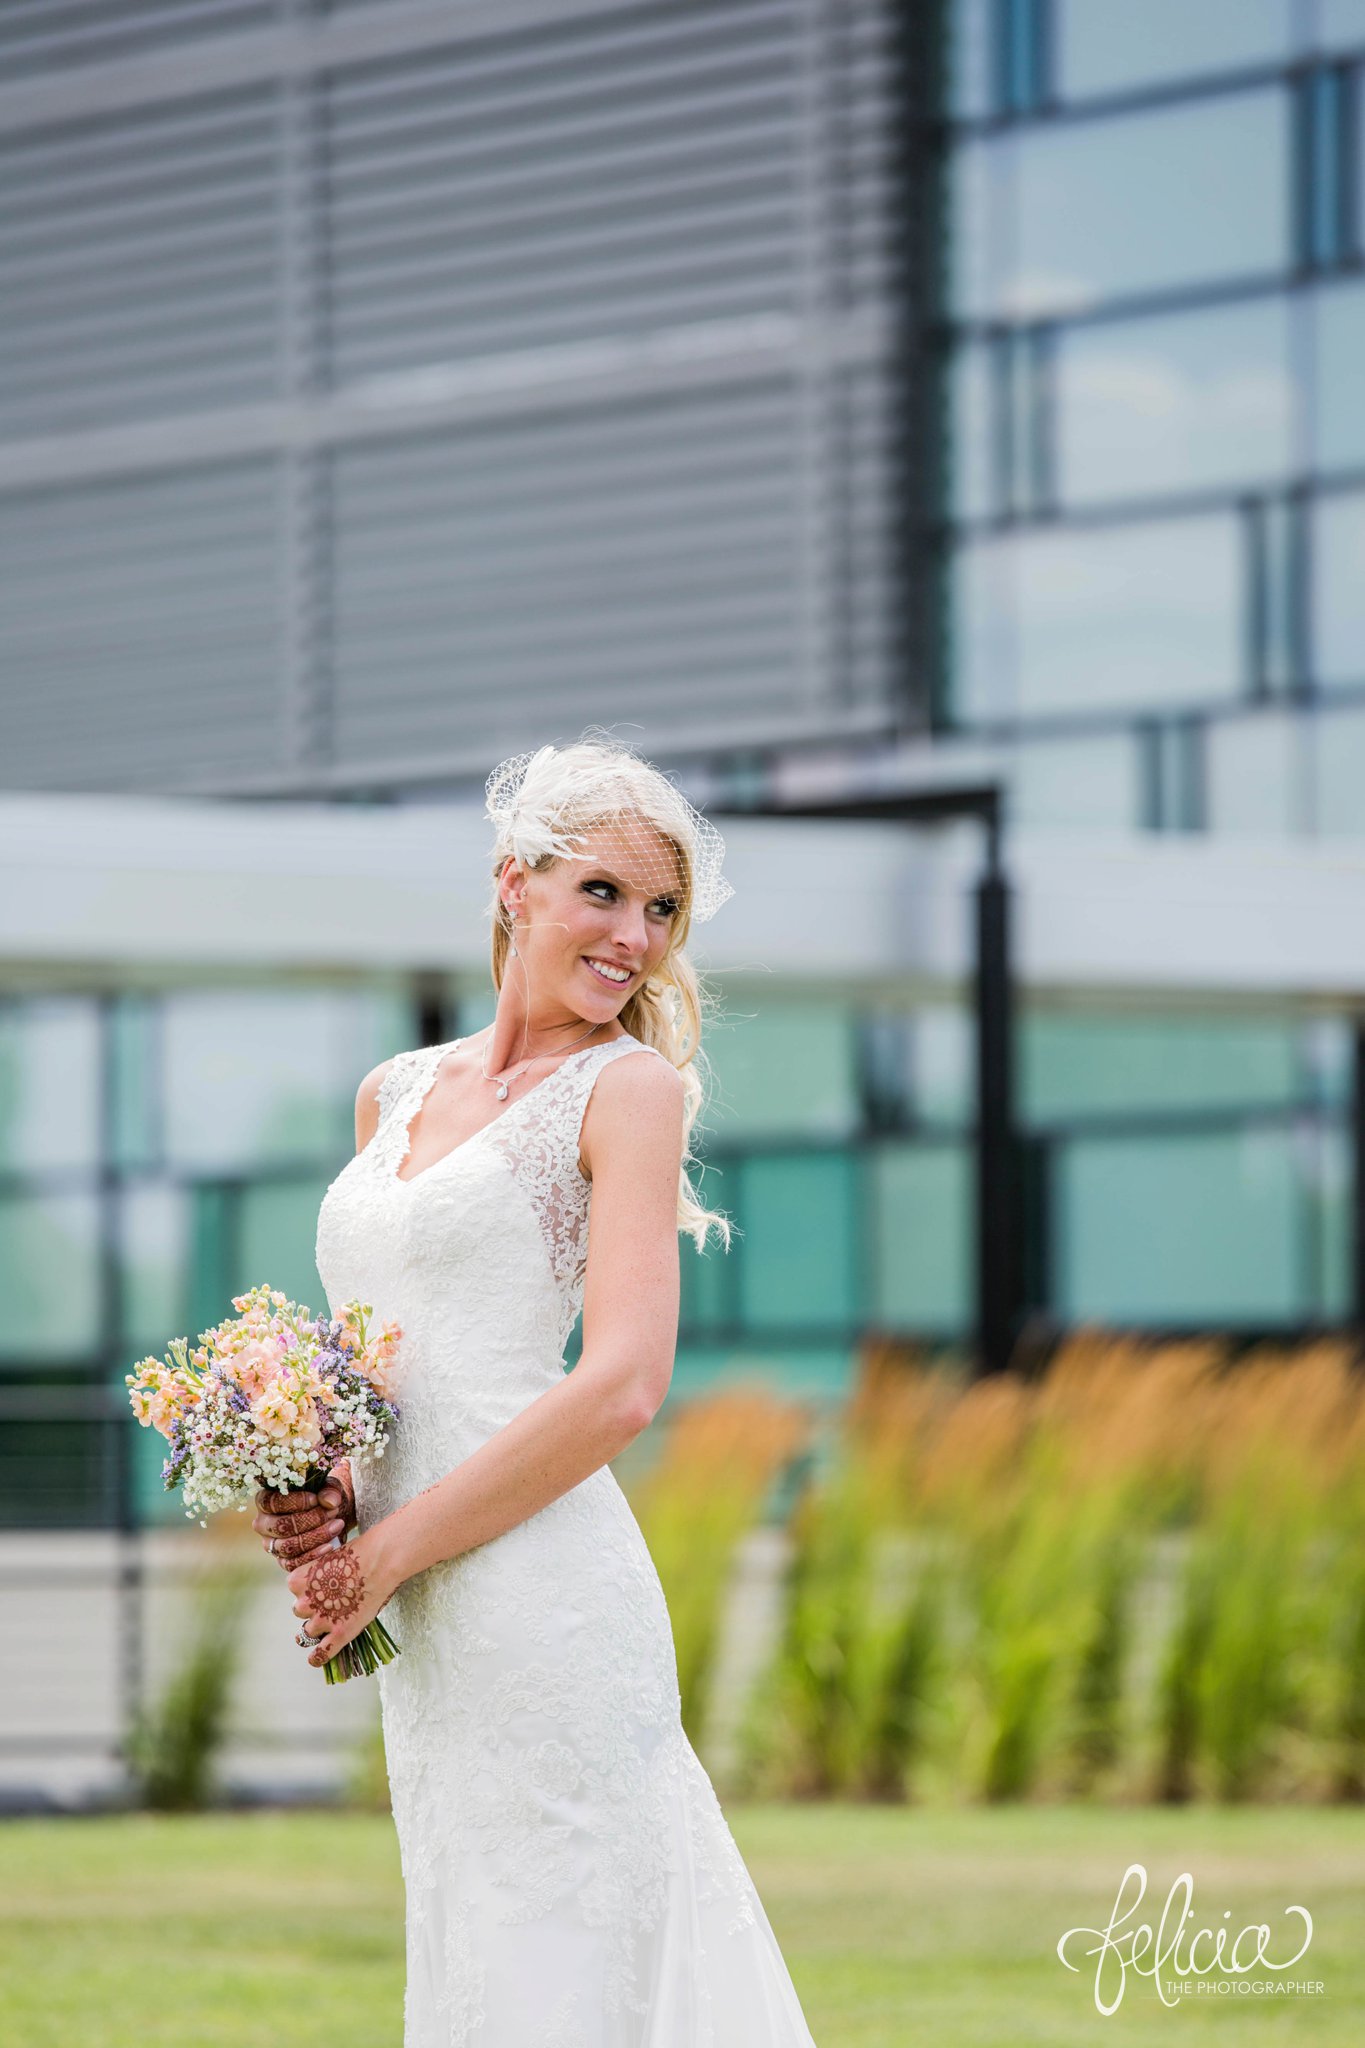 Bride Pose | Poppy and Clovers Florals | Maggie Soterro Melanie | Kansas City